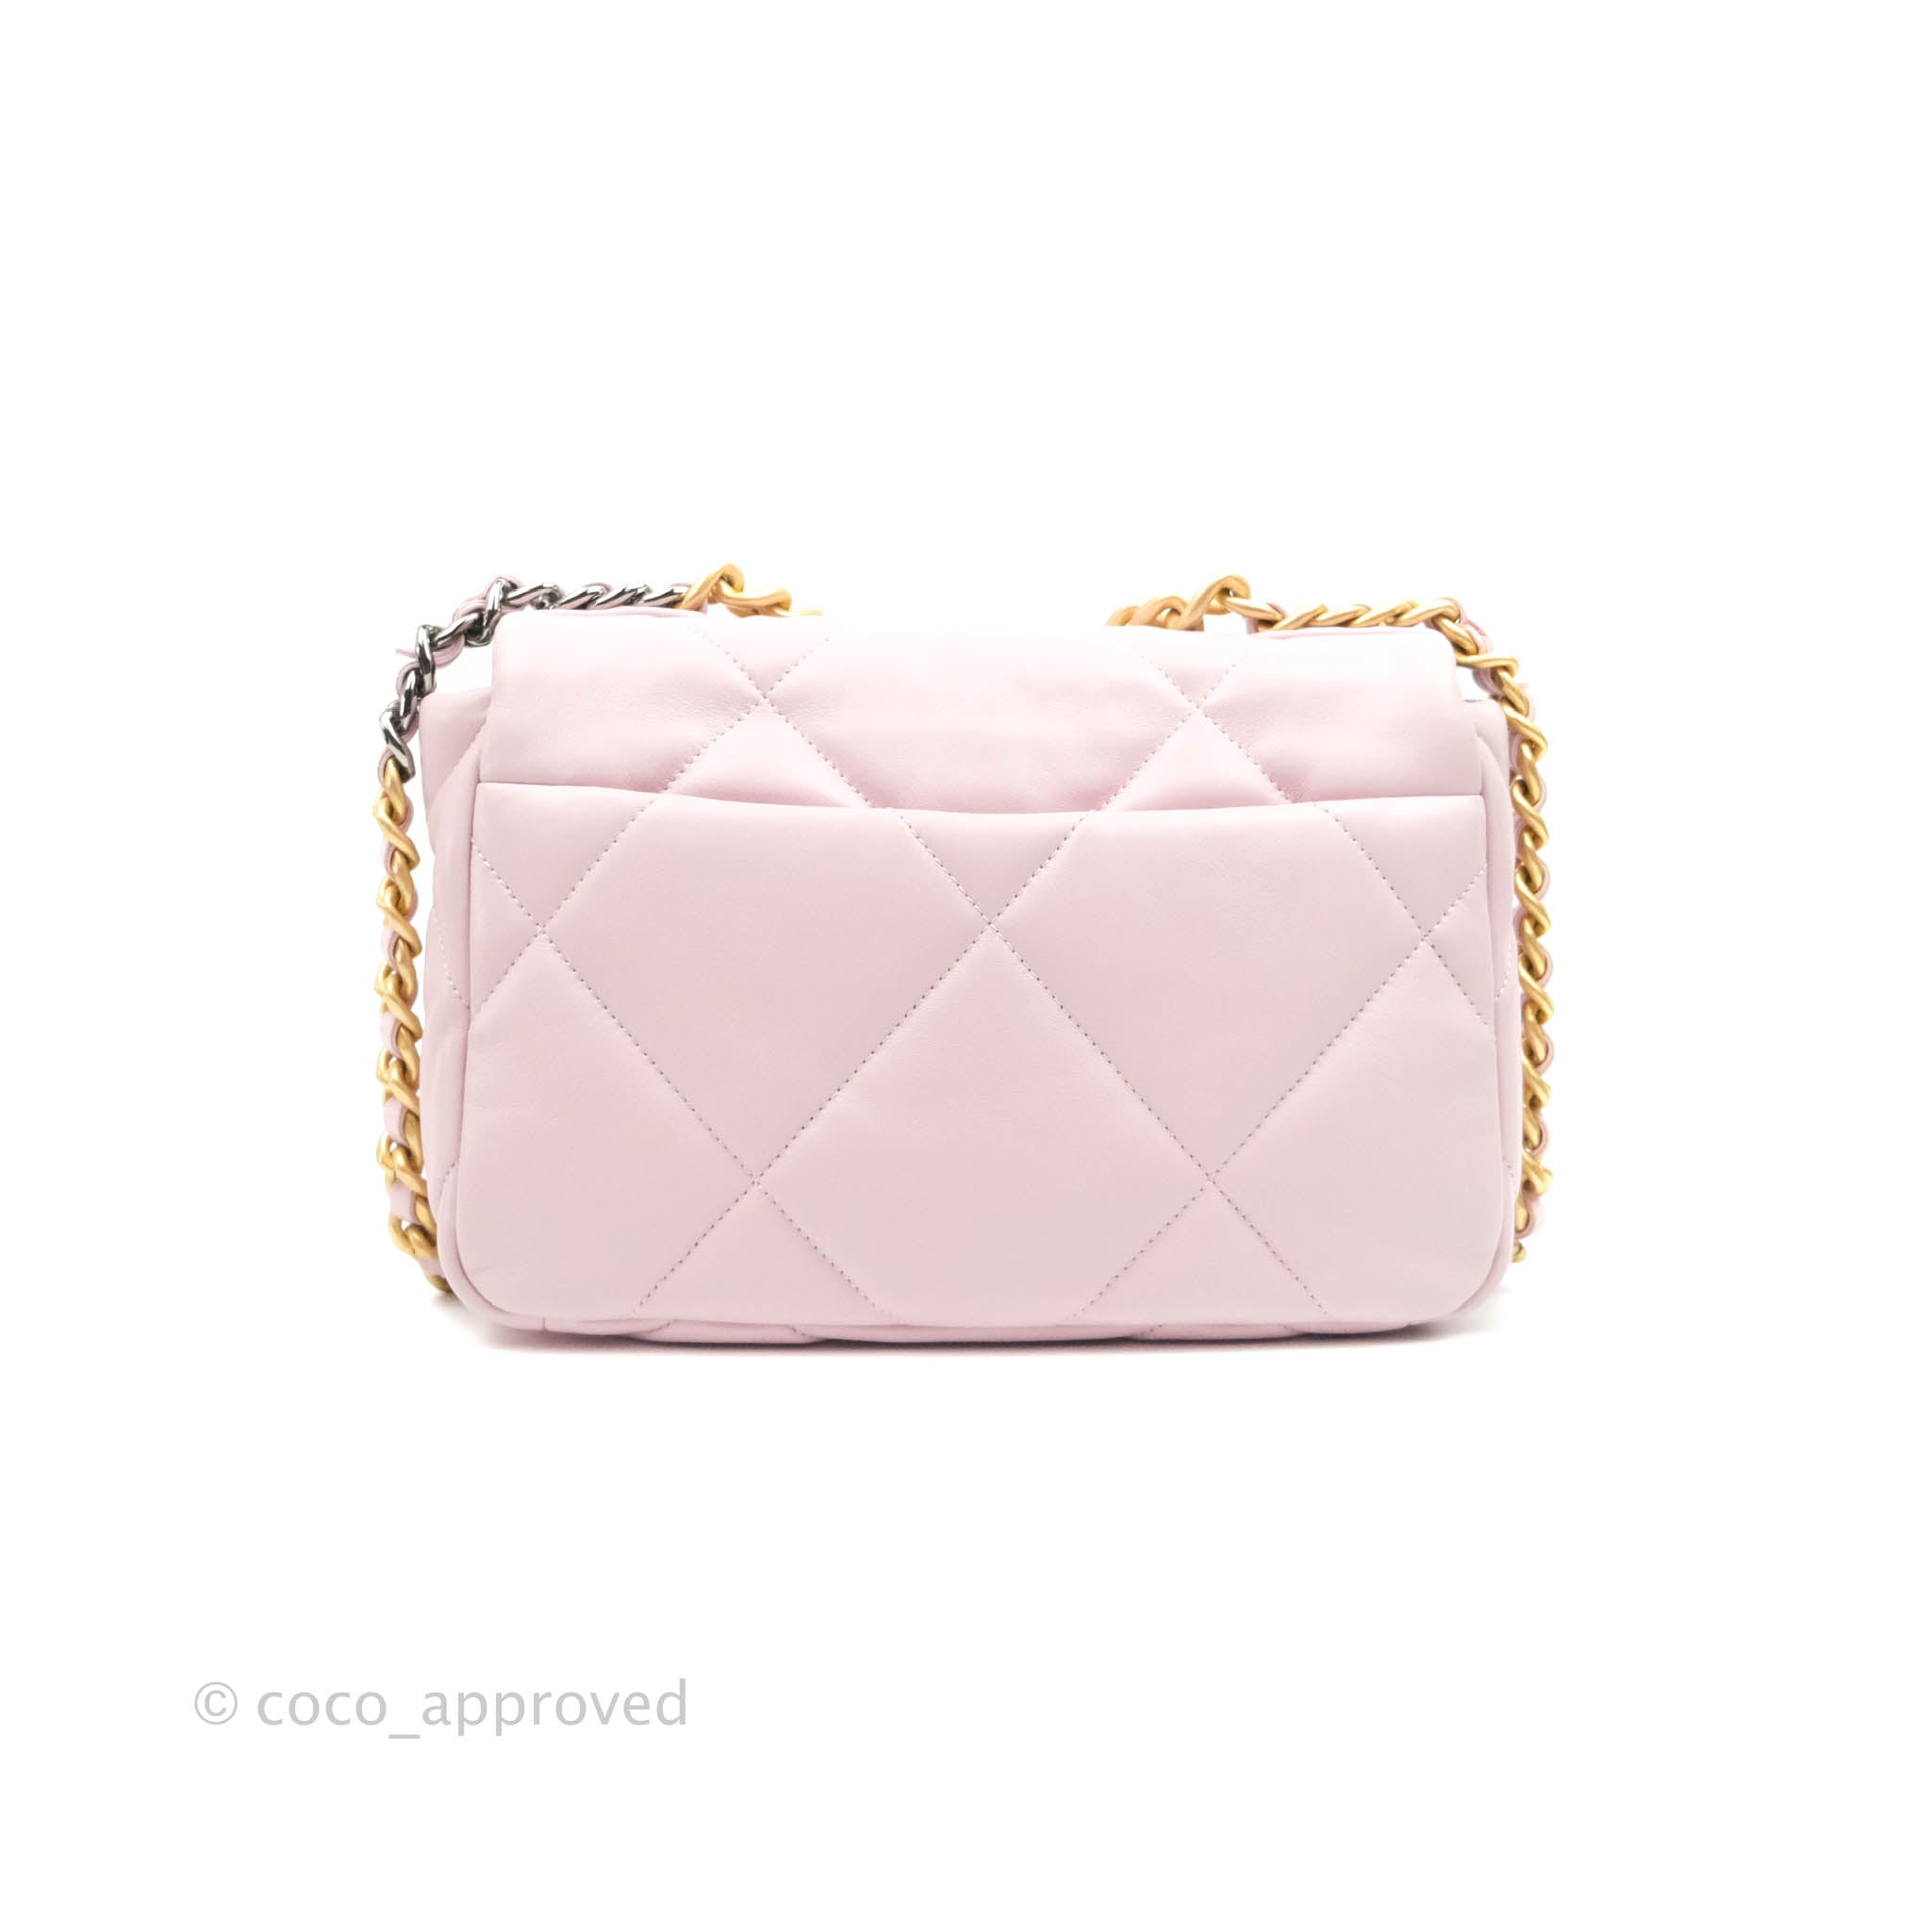 Chanel 19 Medium Flap Quilted Lambskin Leather Shoulder Bag Light Pink